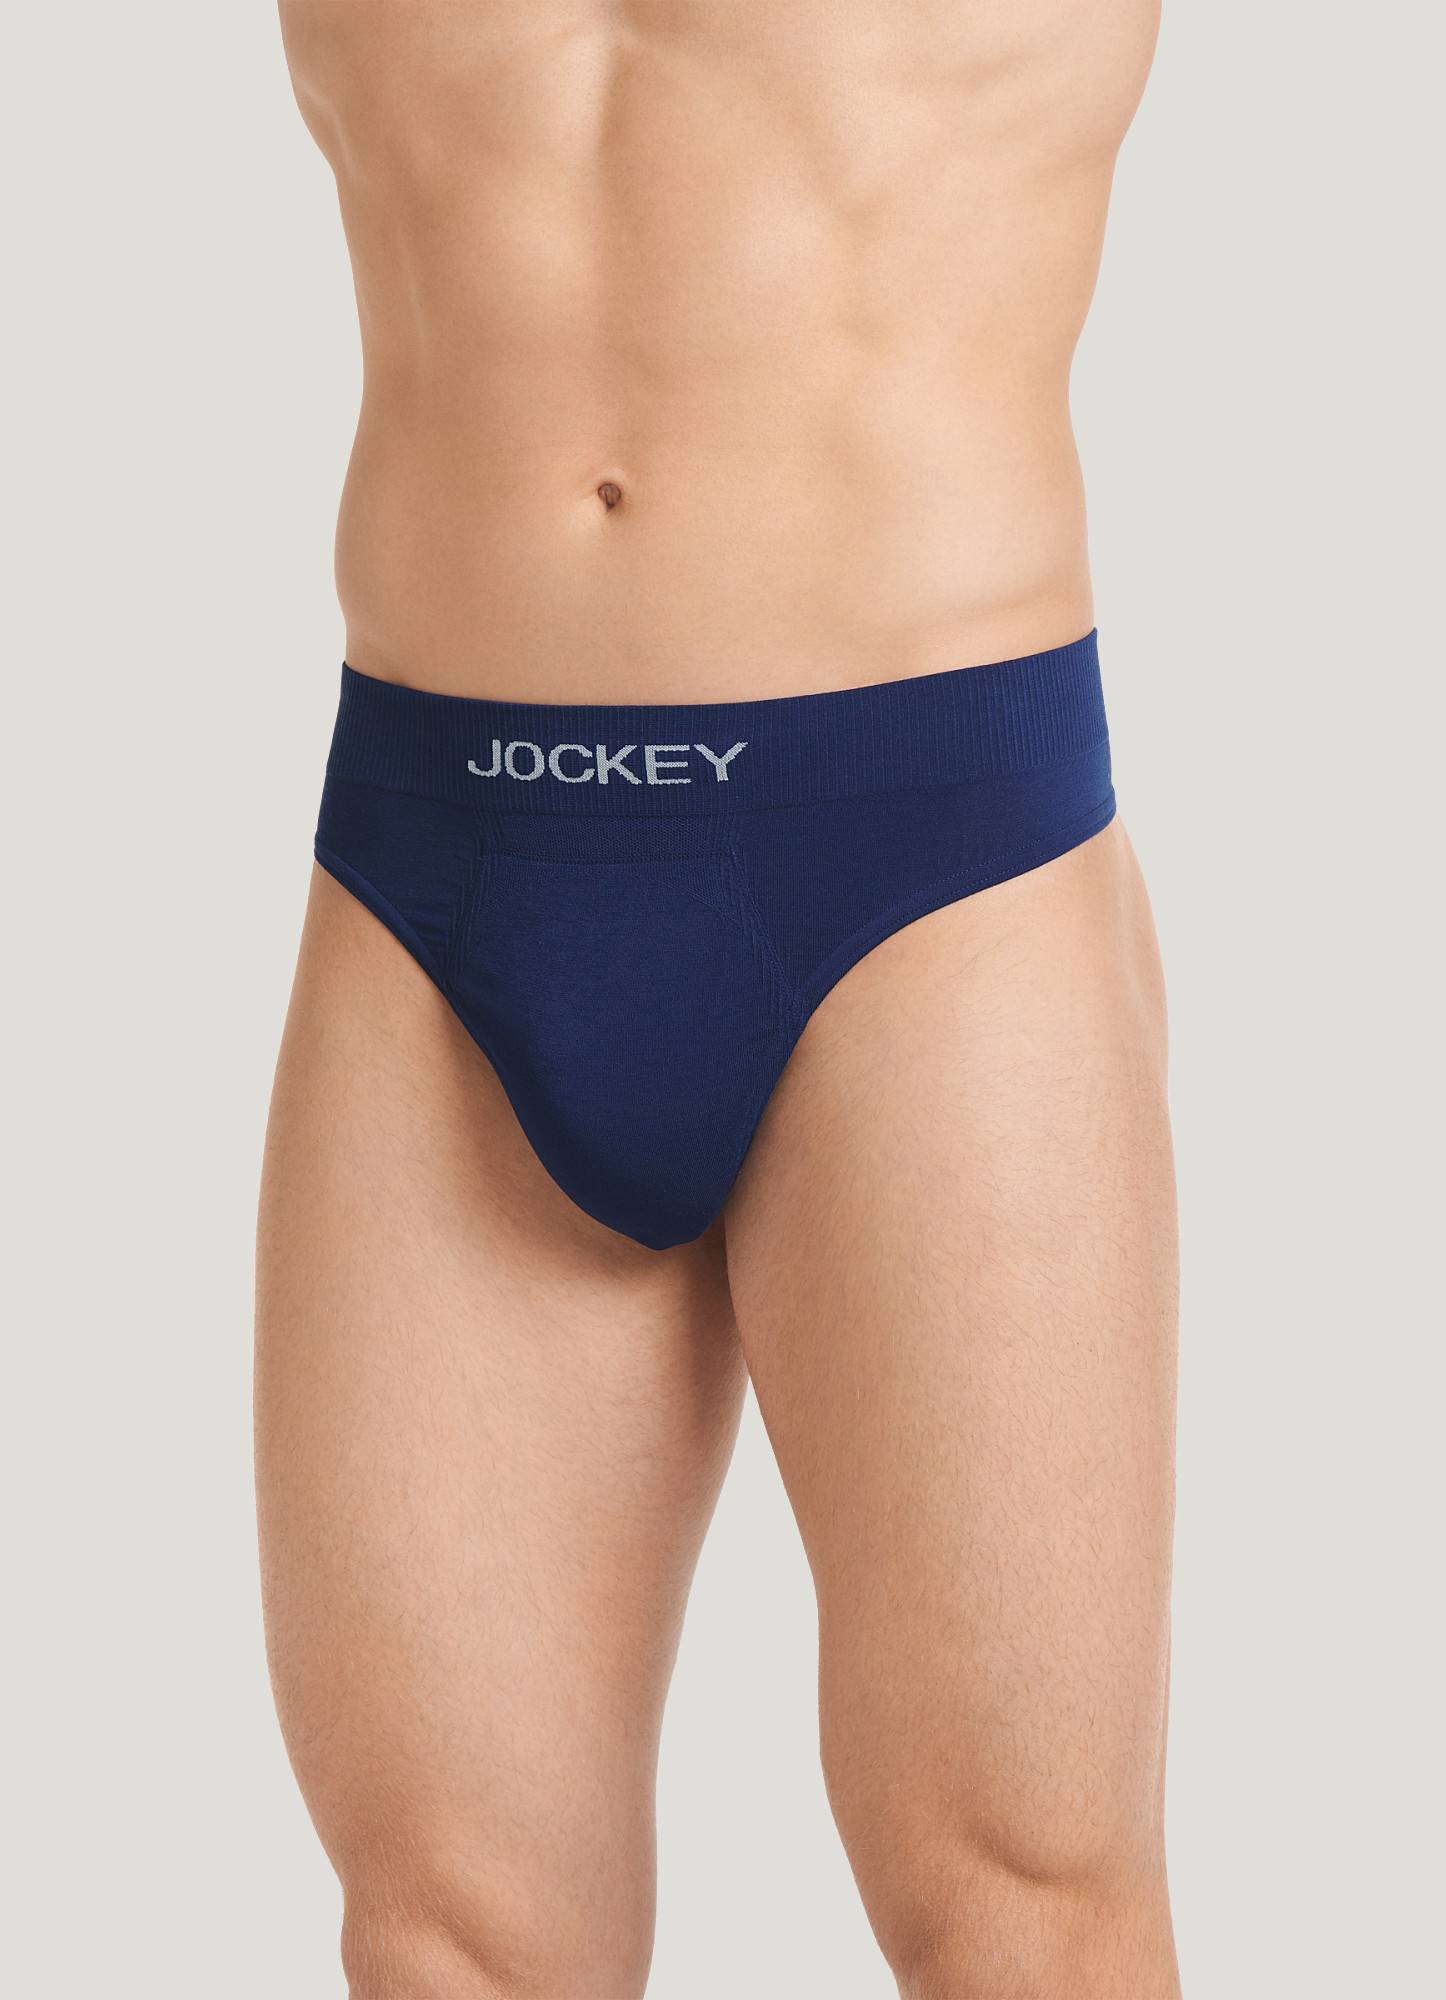 Jockey mens seafoam blue modal seamfree G-string thong underwear size M L  XL 2XL - Helia Beer Co